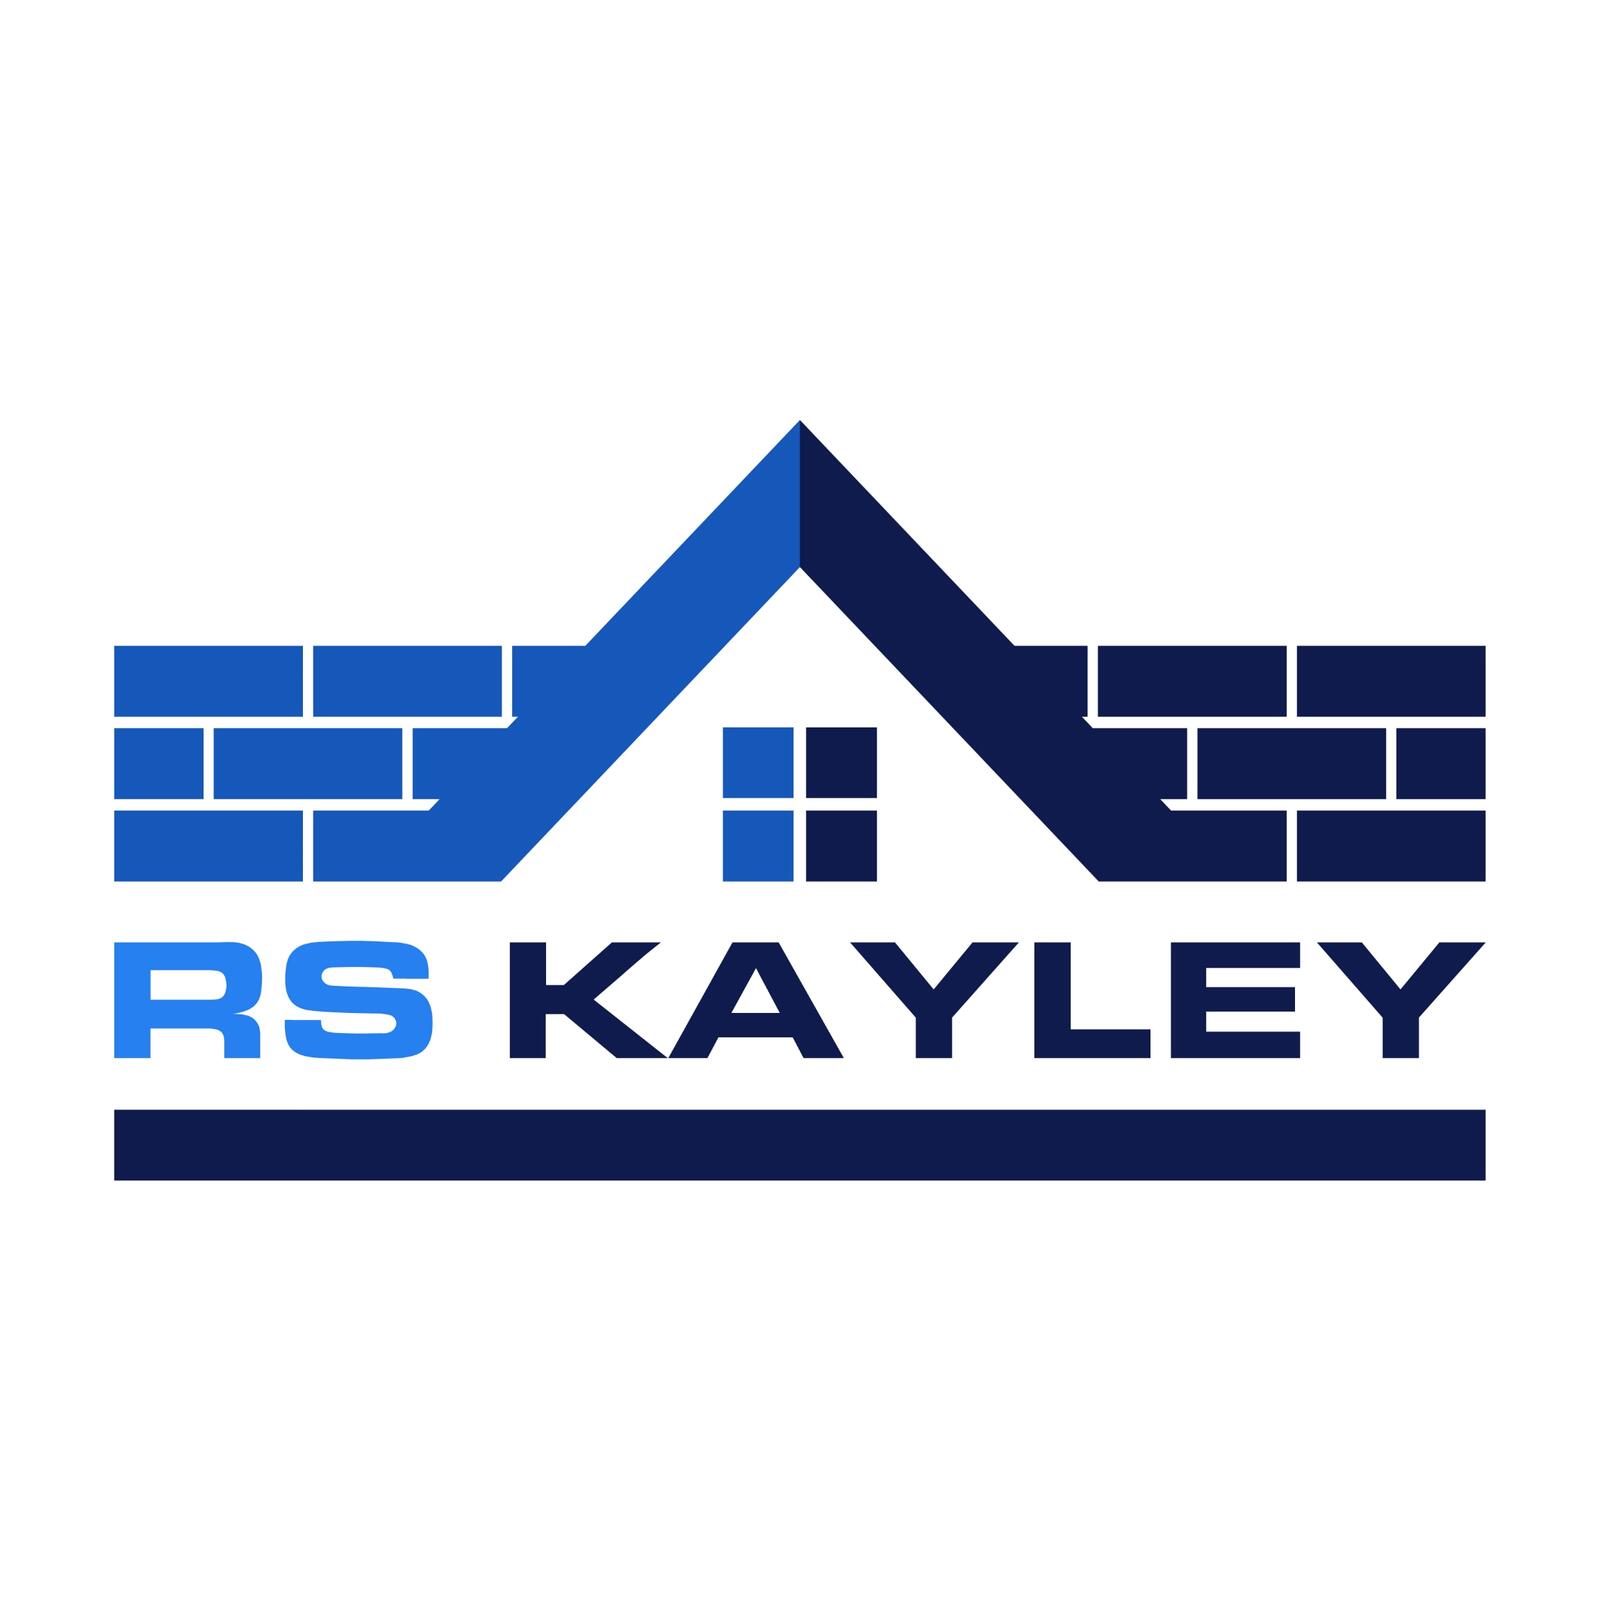 RS Kayley Brickwork